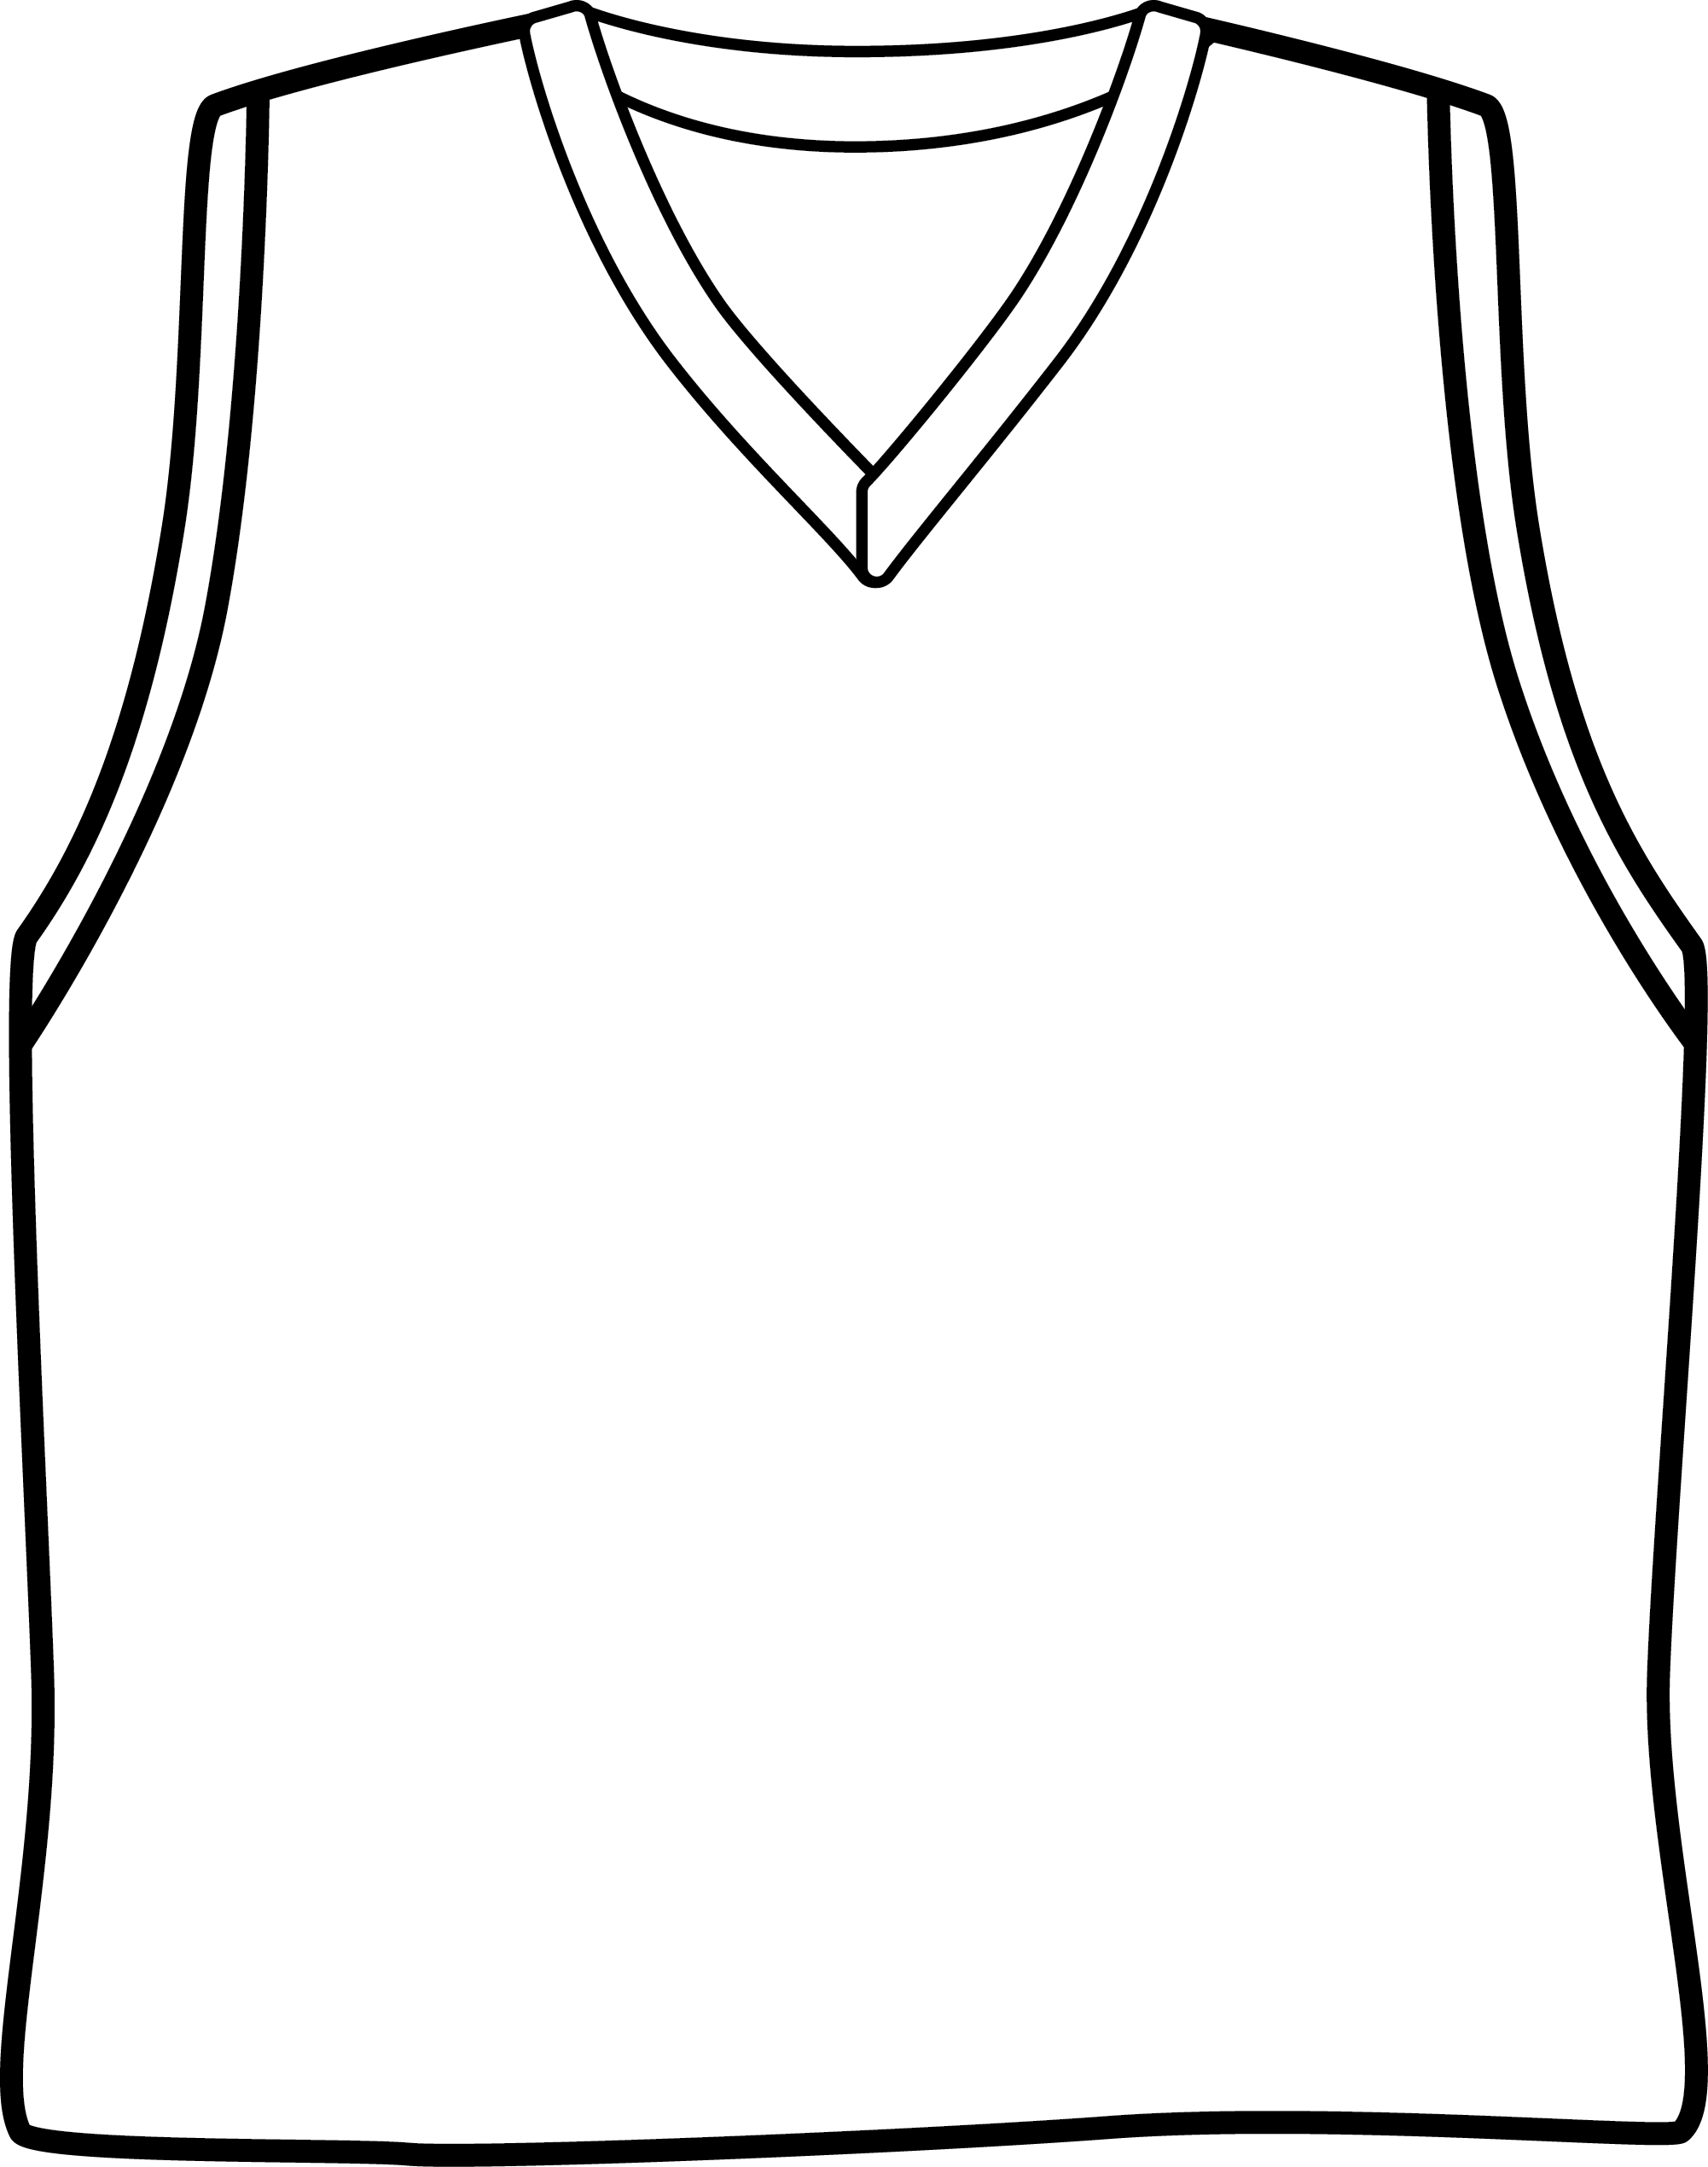 black basketball jersey template - Clip Art Library